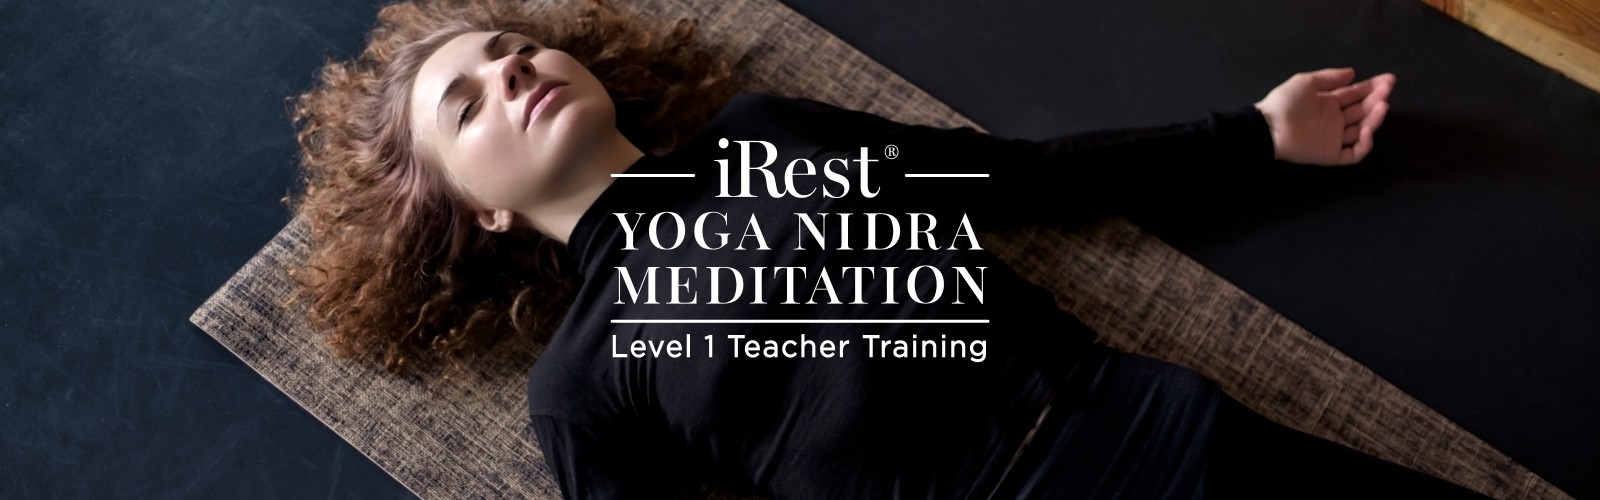 Online iRest Yoga Nidra Meditation Level 1 Training